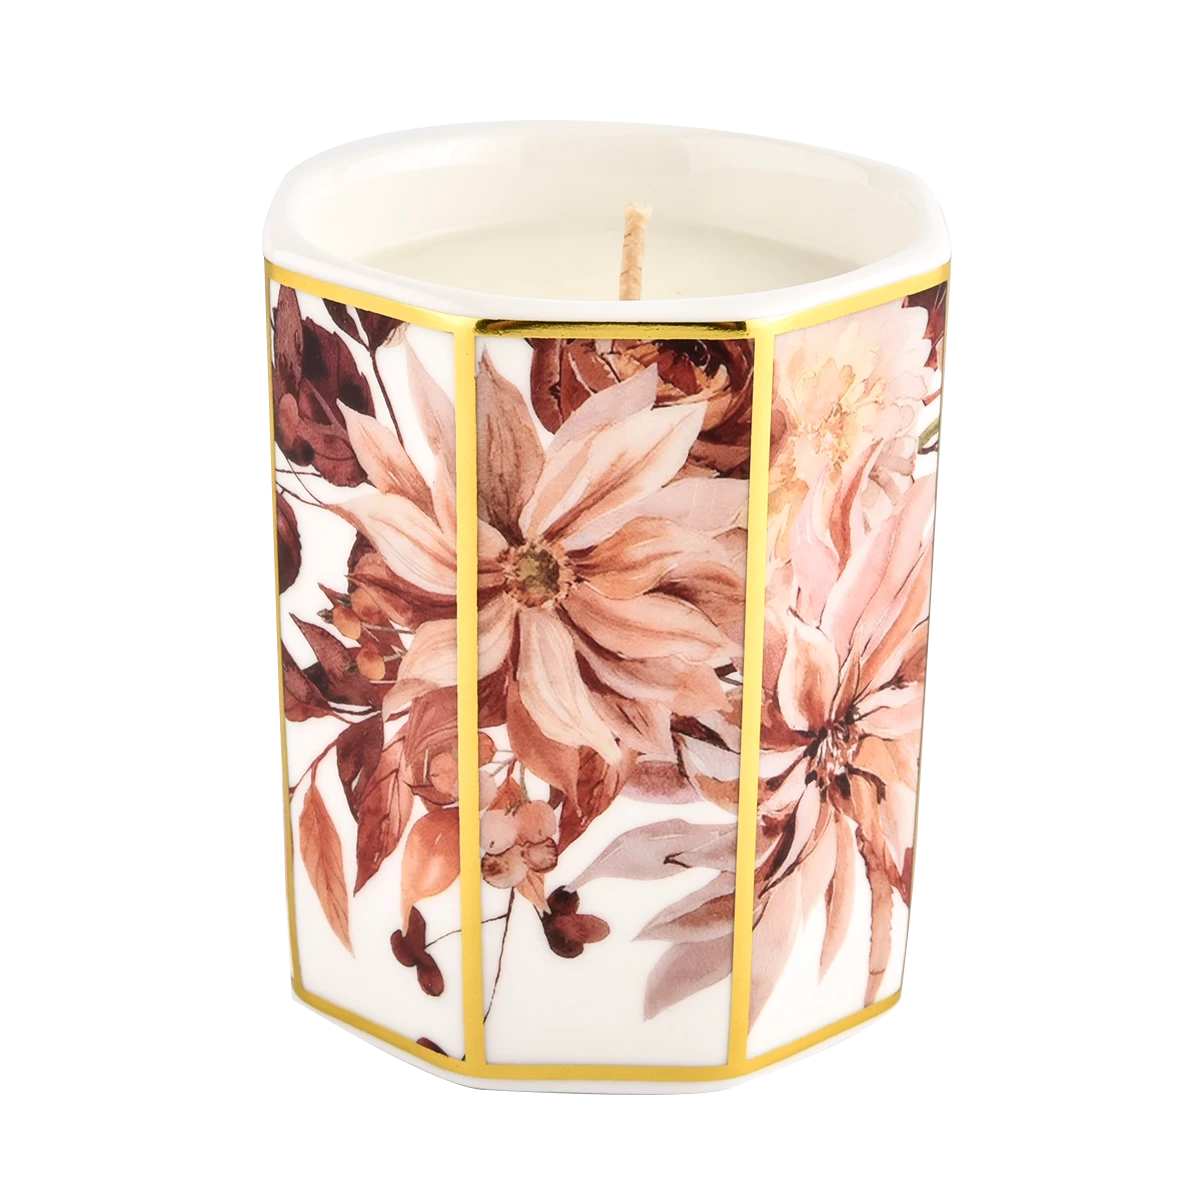 Wholesale custom octagonal decal of red roses ceramic candle jar